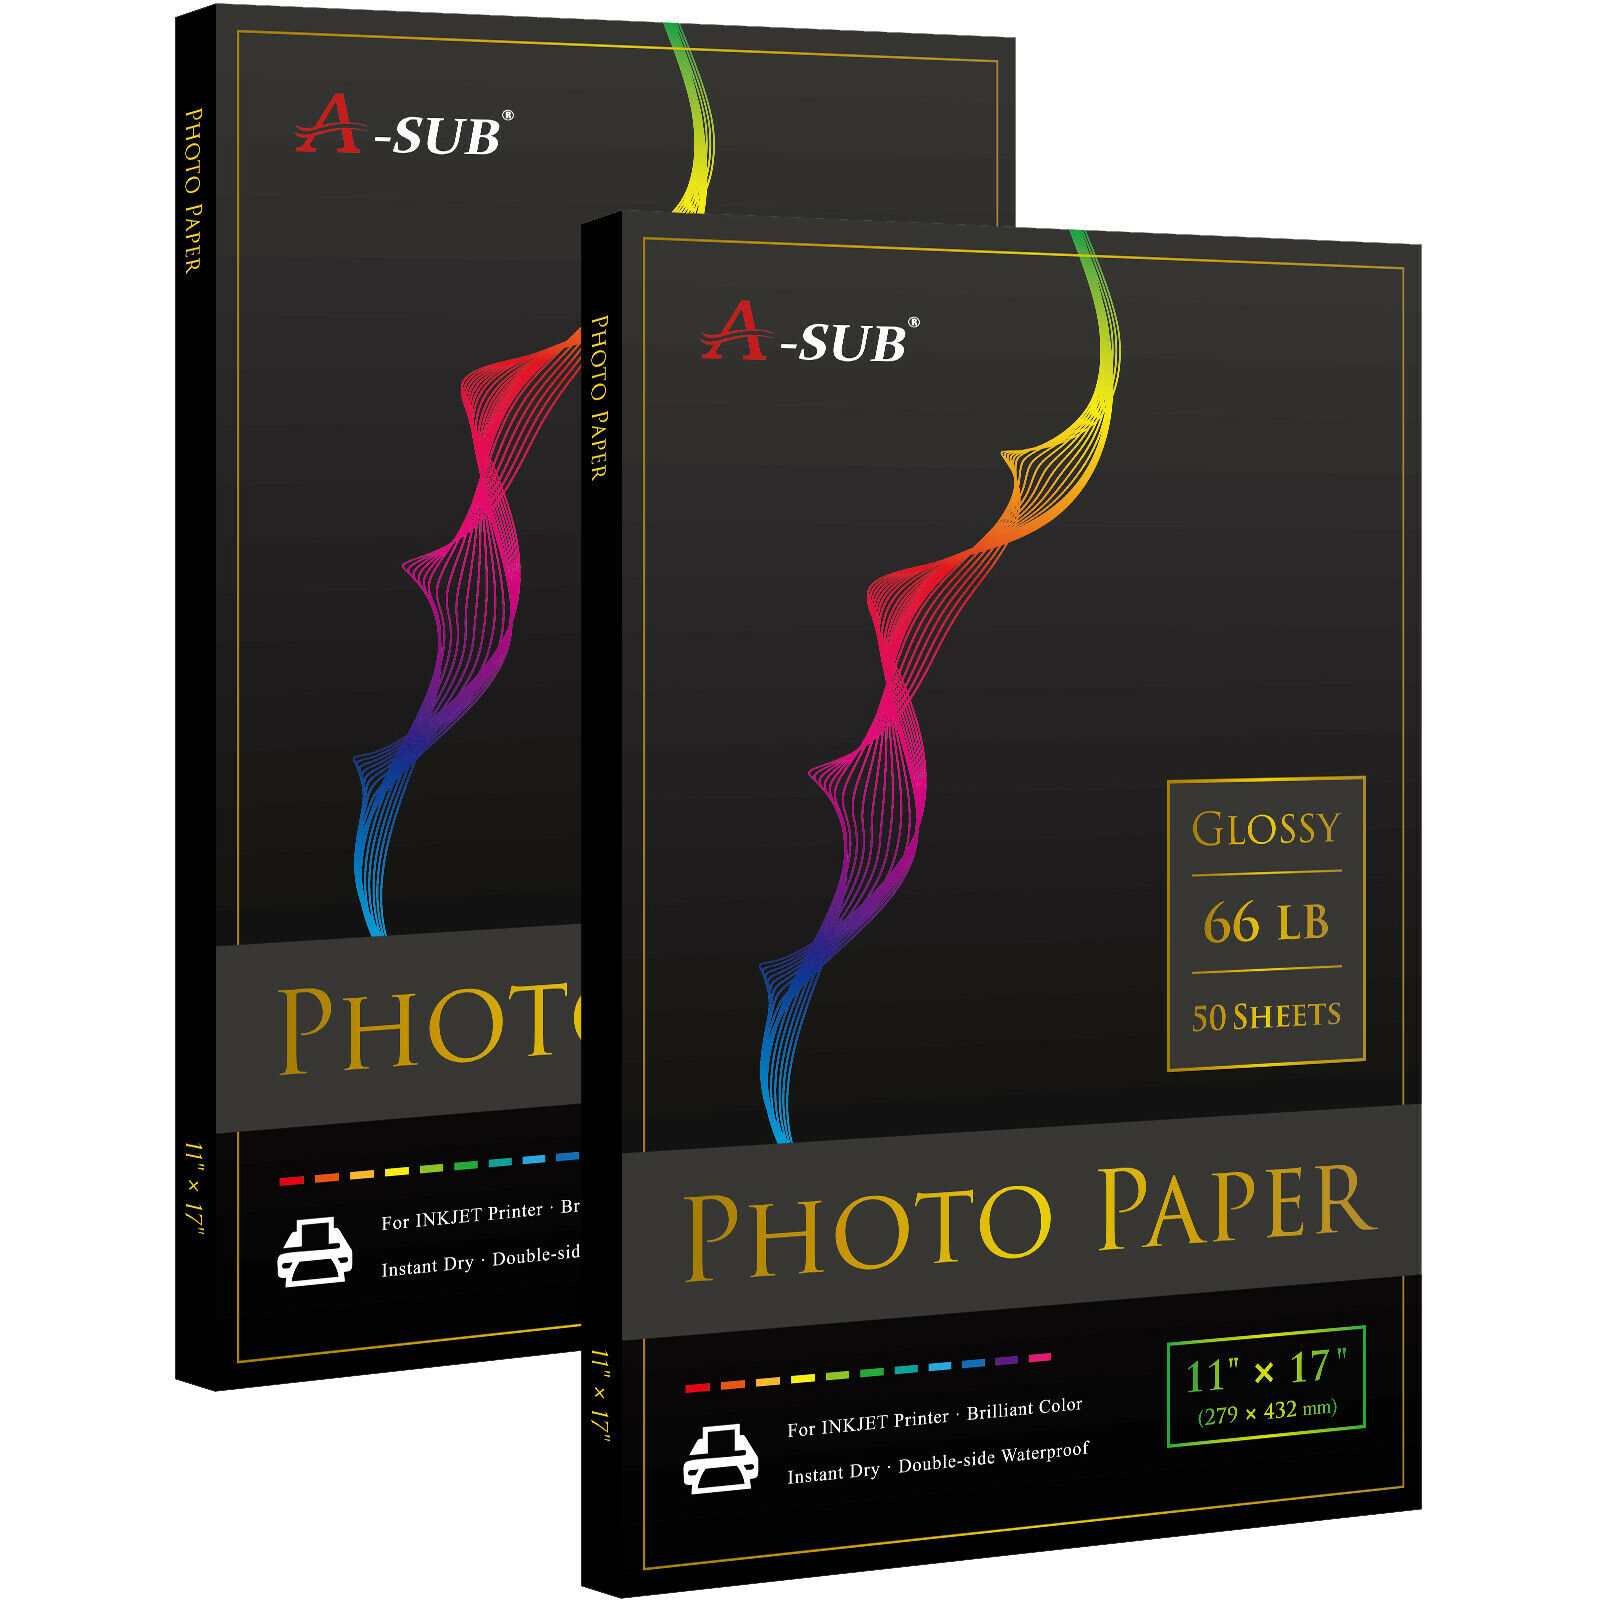 100 Sheet A-SUB Photo Paper 11x17 Glossy 66lb 250g RC Inkjet Photo Printer Paper